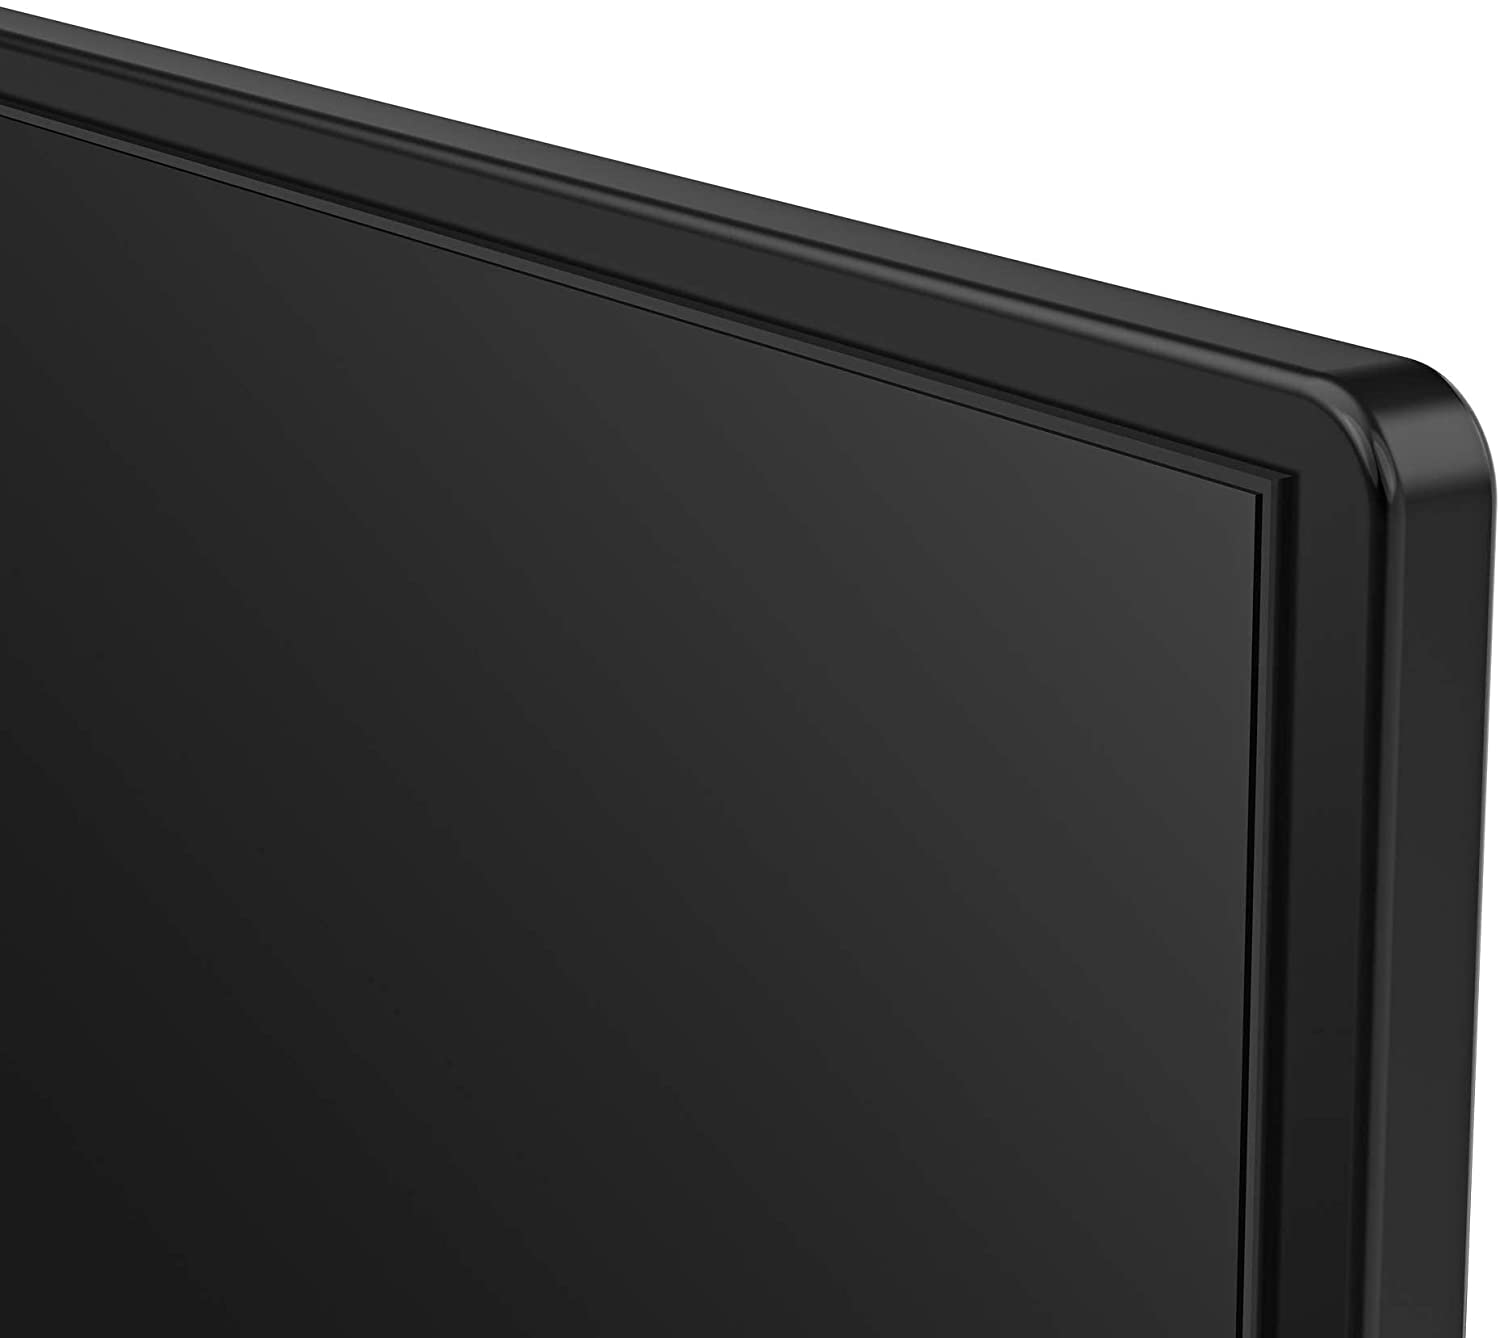 All-New Toshiba 43-Inch 43C350KU C350 Series LED 4K UHD Smart Fire TV, Released 2021